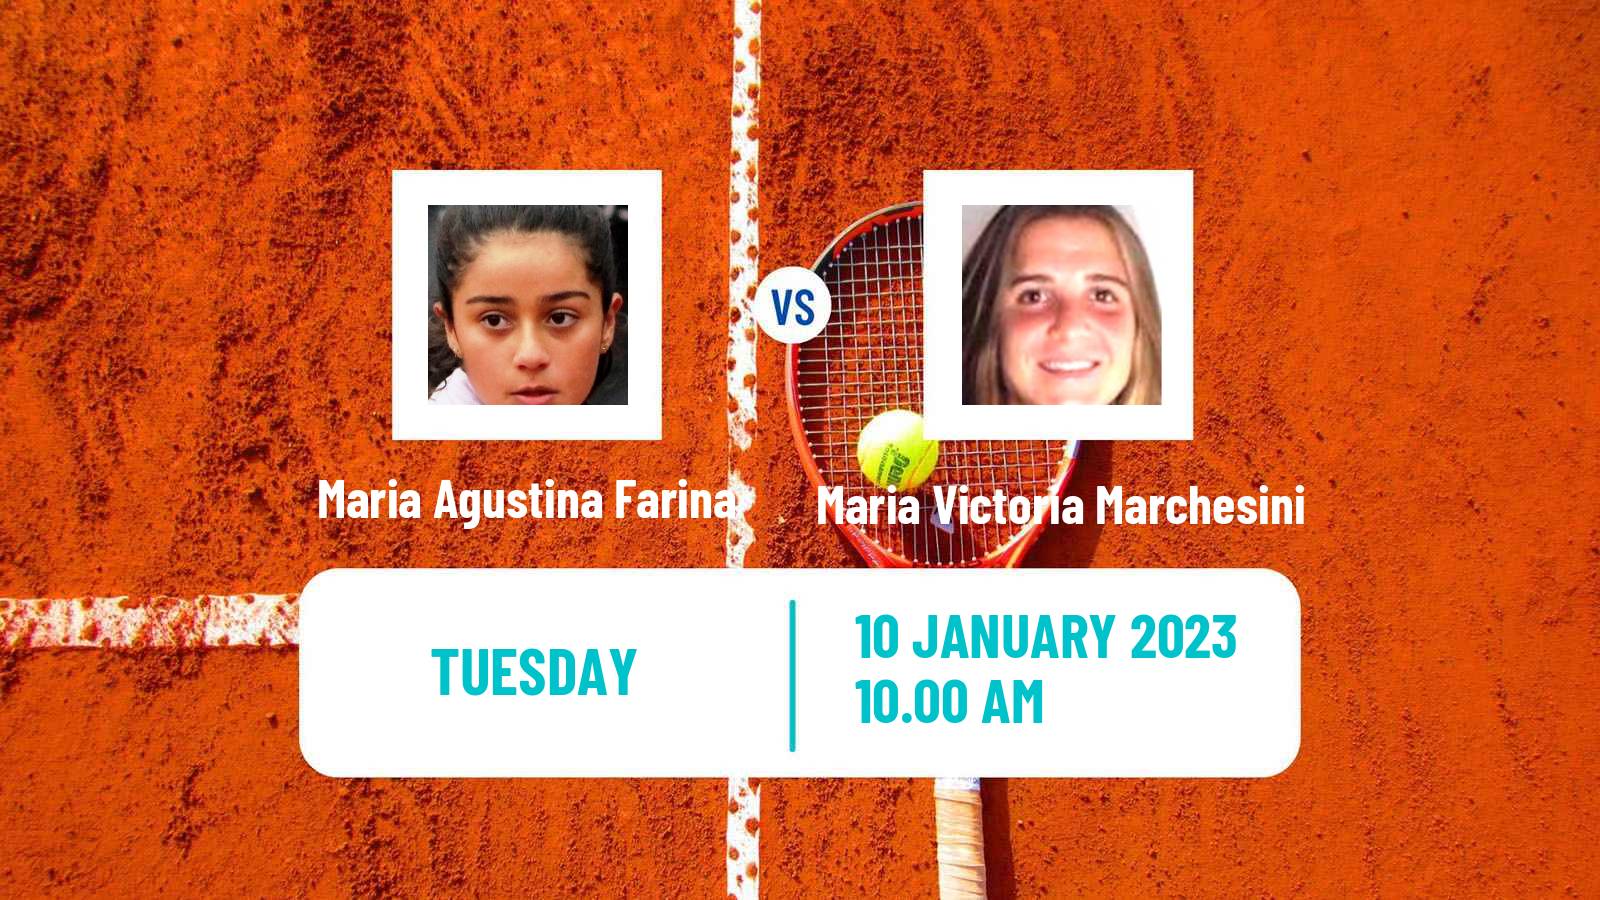 Tennis ITF Tournaments Maria Agustina Farina - Maria Victoria Marchesini